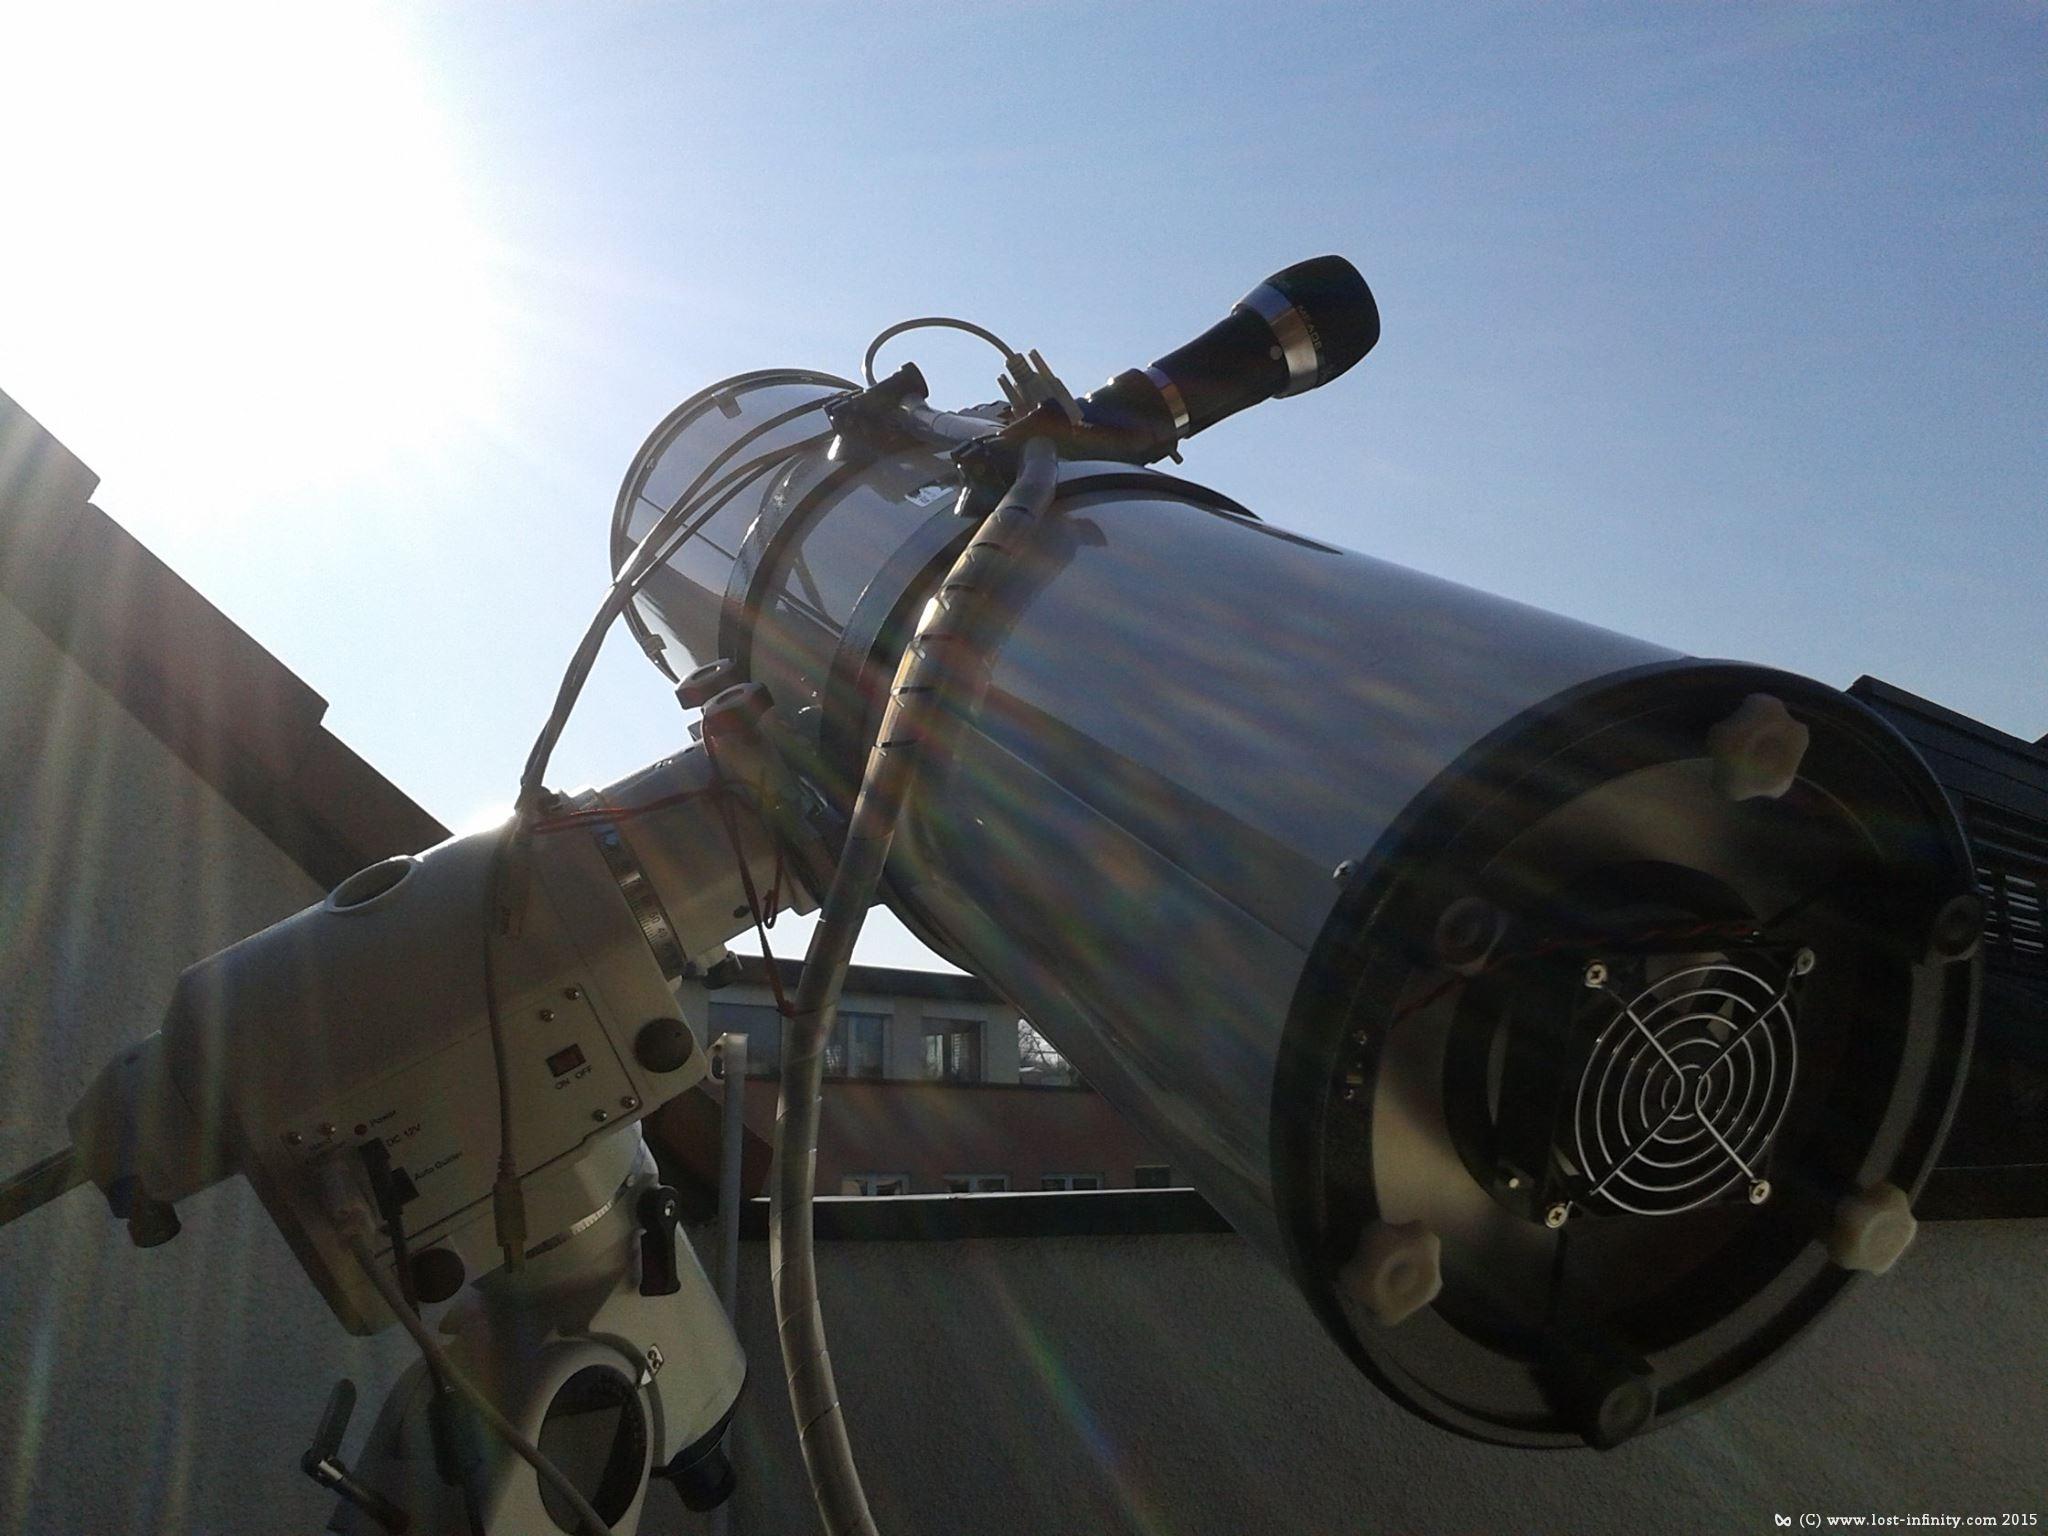 8" 1000mm Newtonian telescope on EQ6 pro